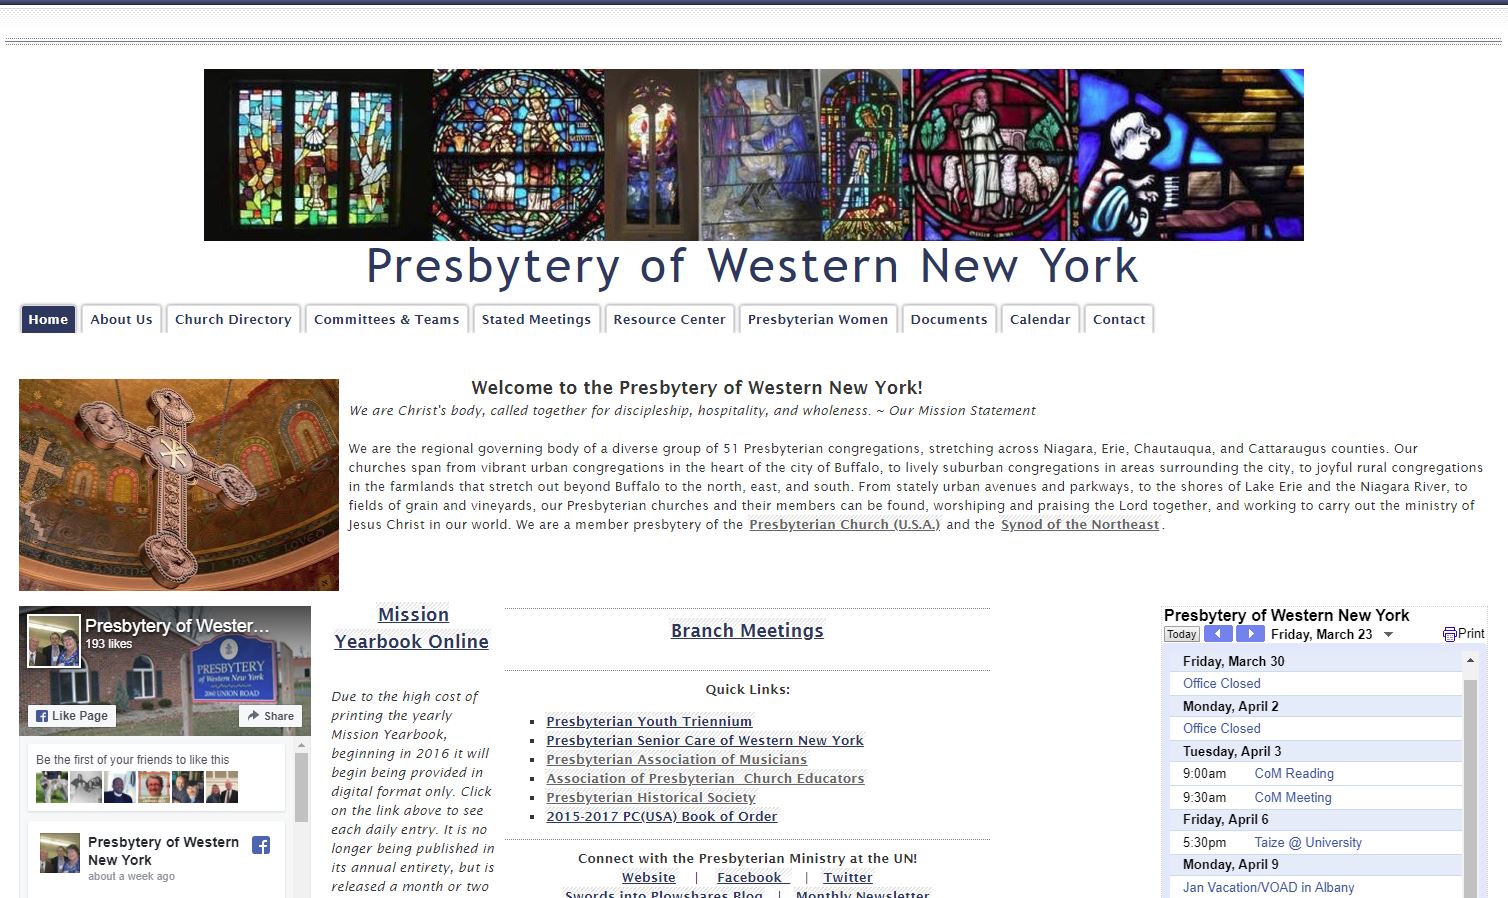 Presbytery of Western New York.